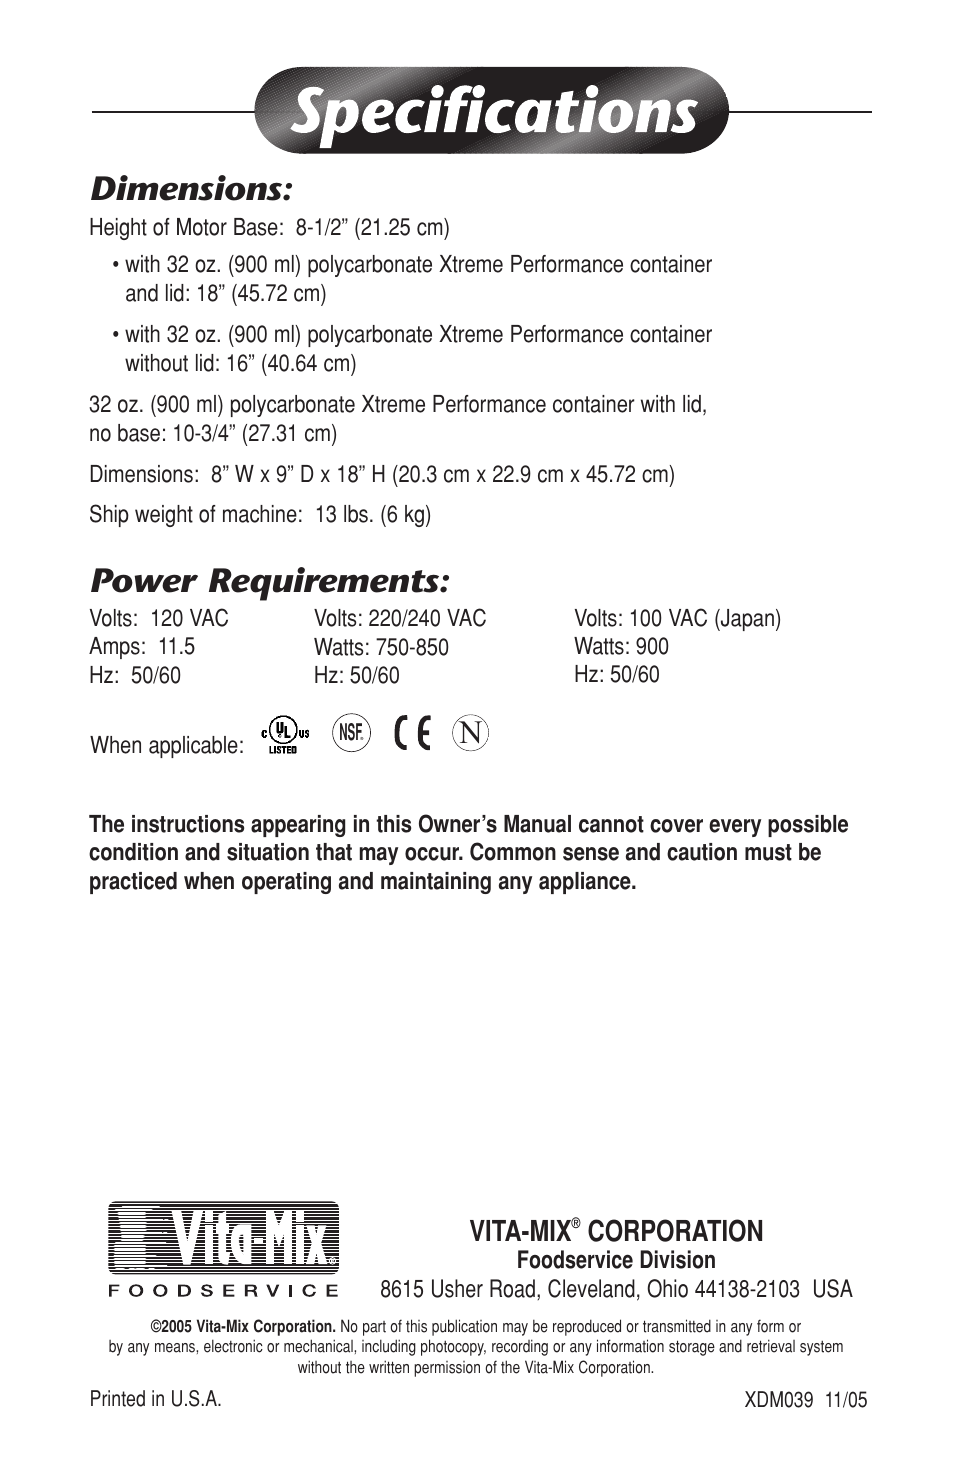 Dimensions, Power requirements, Vita-mix | Corporation | Vita-Mix BARBOSS MP User Manual | Page 16 / 16